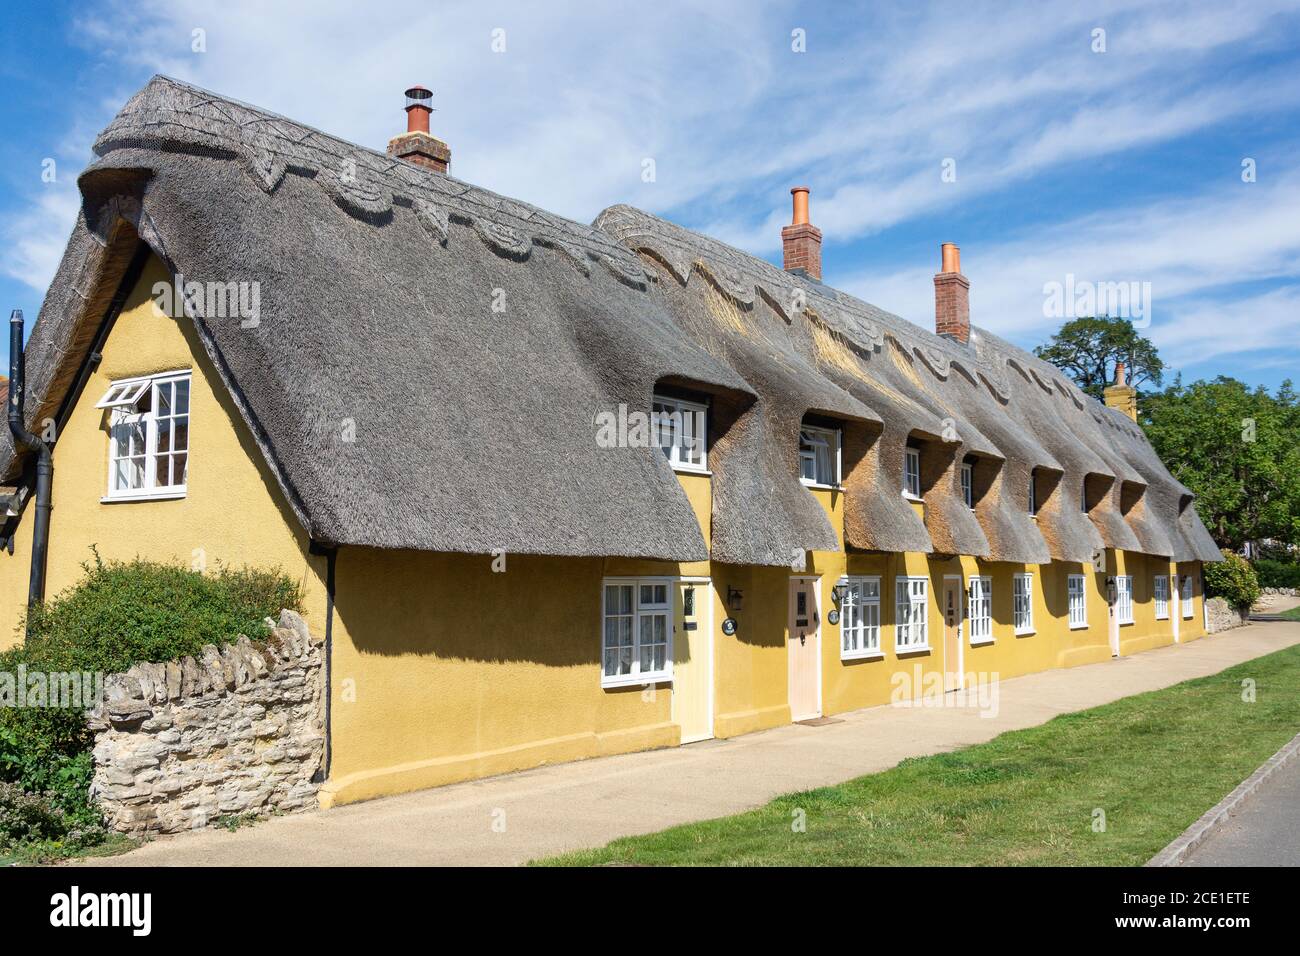 Thatched cottages, Main Road, Biddenham, Bedfordshire, England, United Kingdom Stock Photo